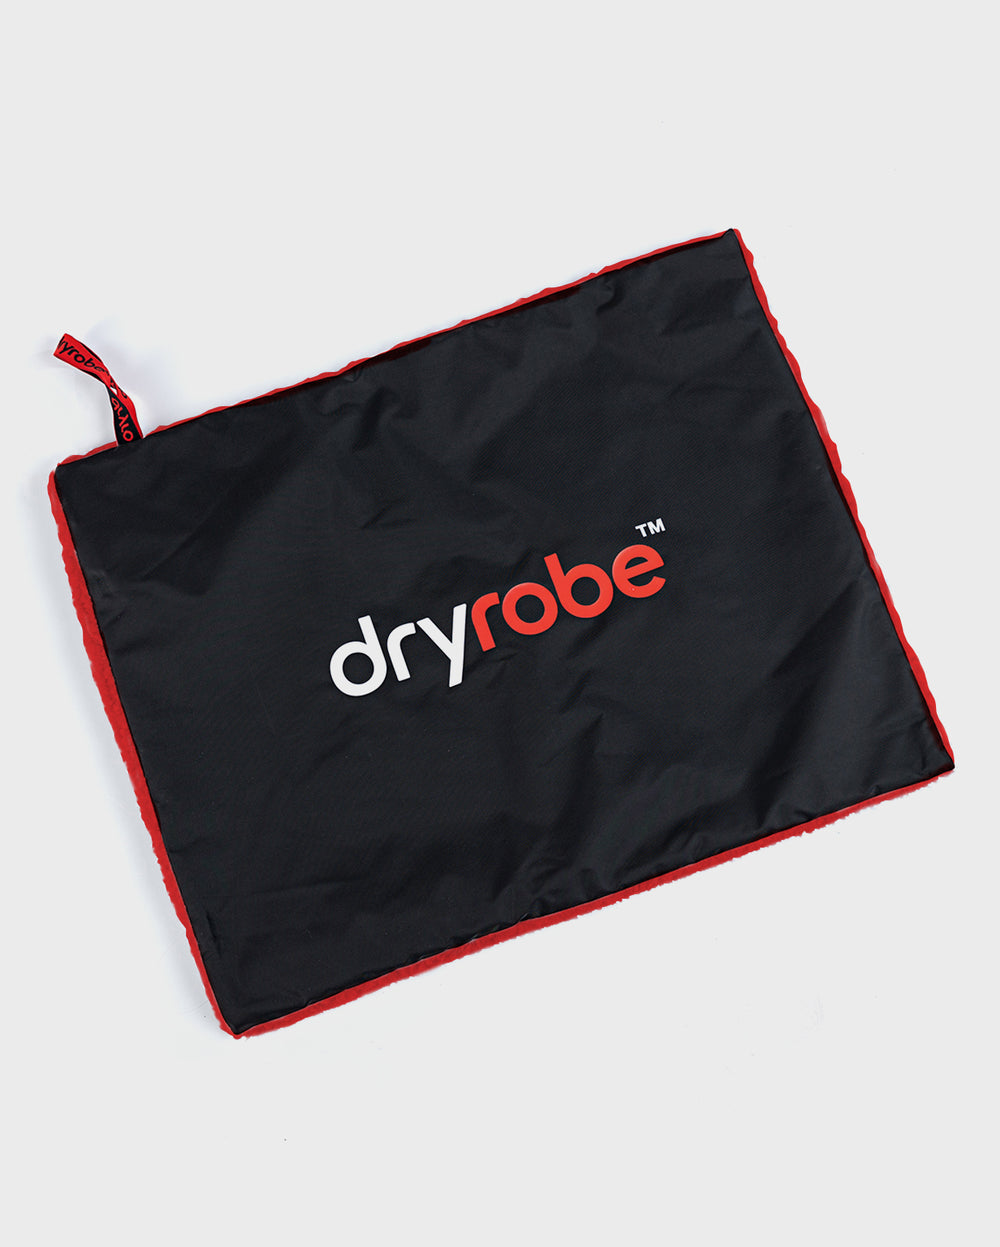 dryrobe Cushion Cover